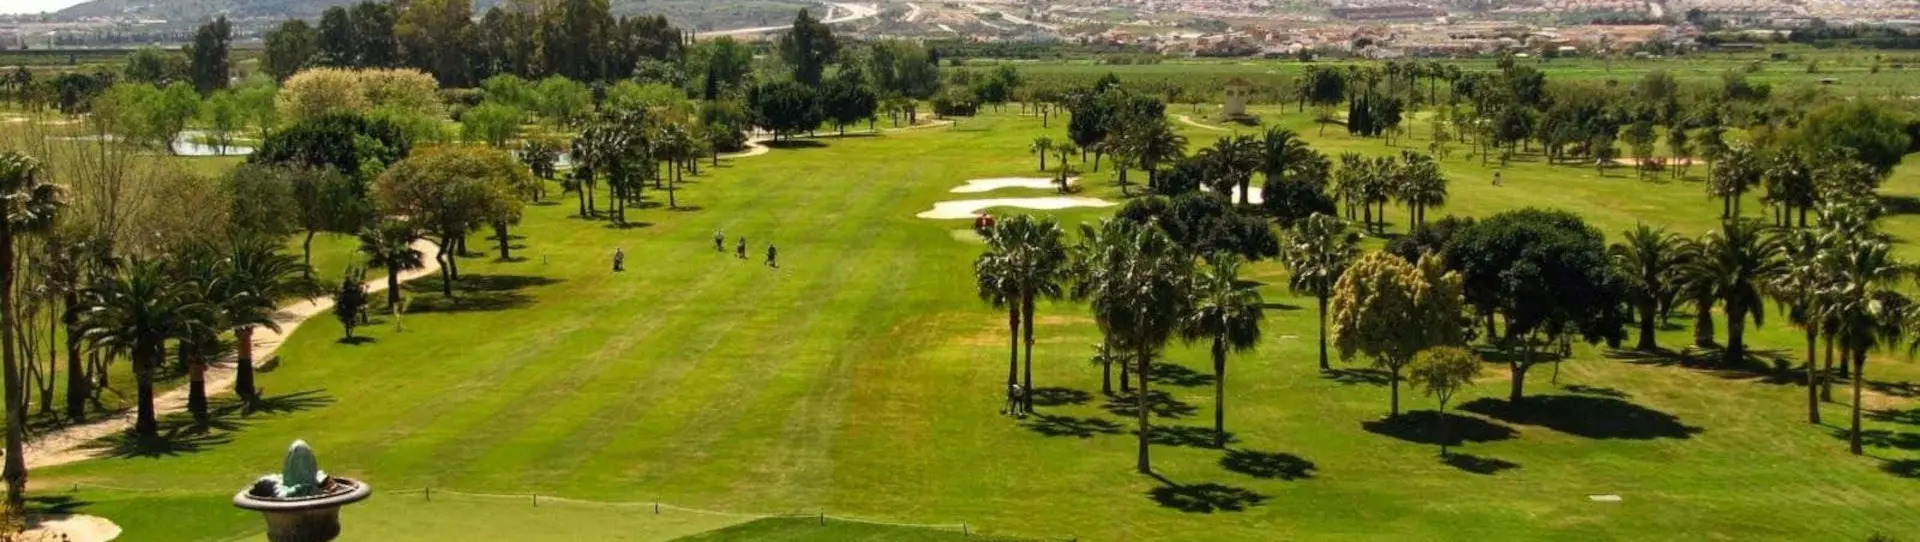 Spain golf courses - Real Guadalhorce Golf Club - Photo 2